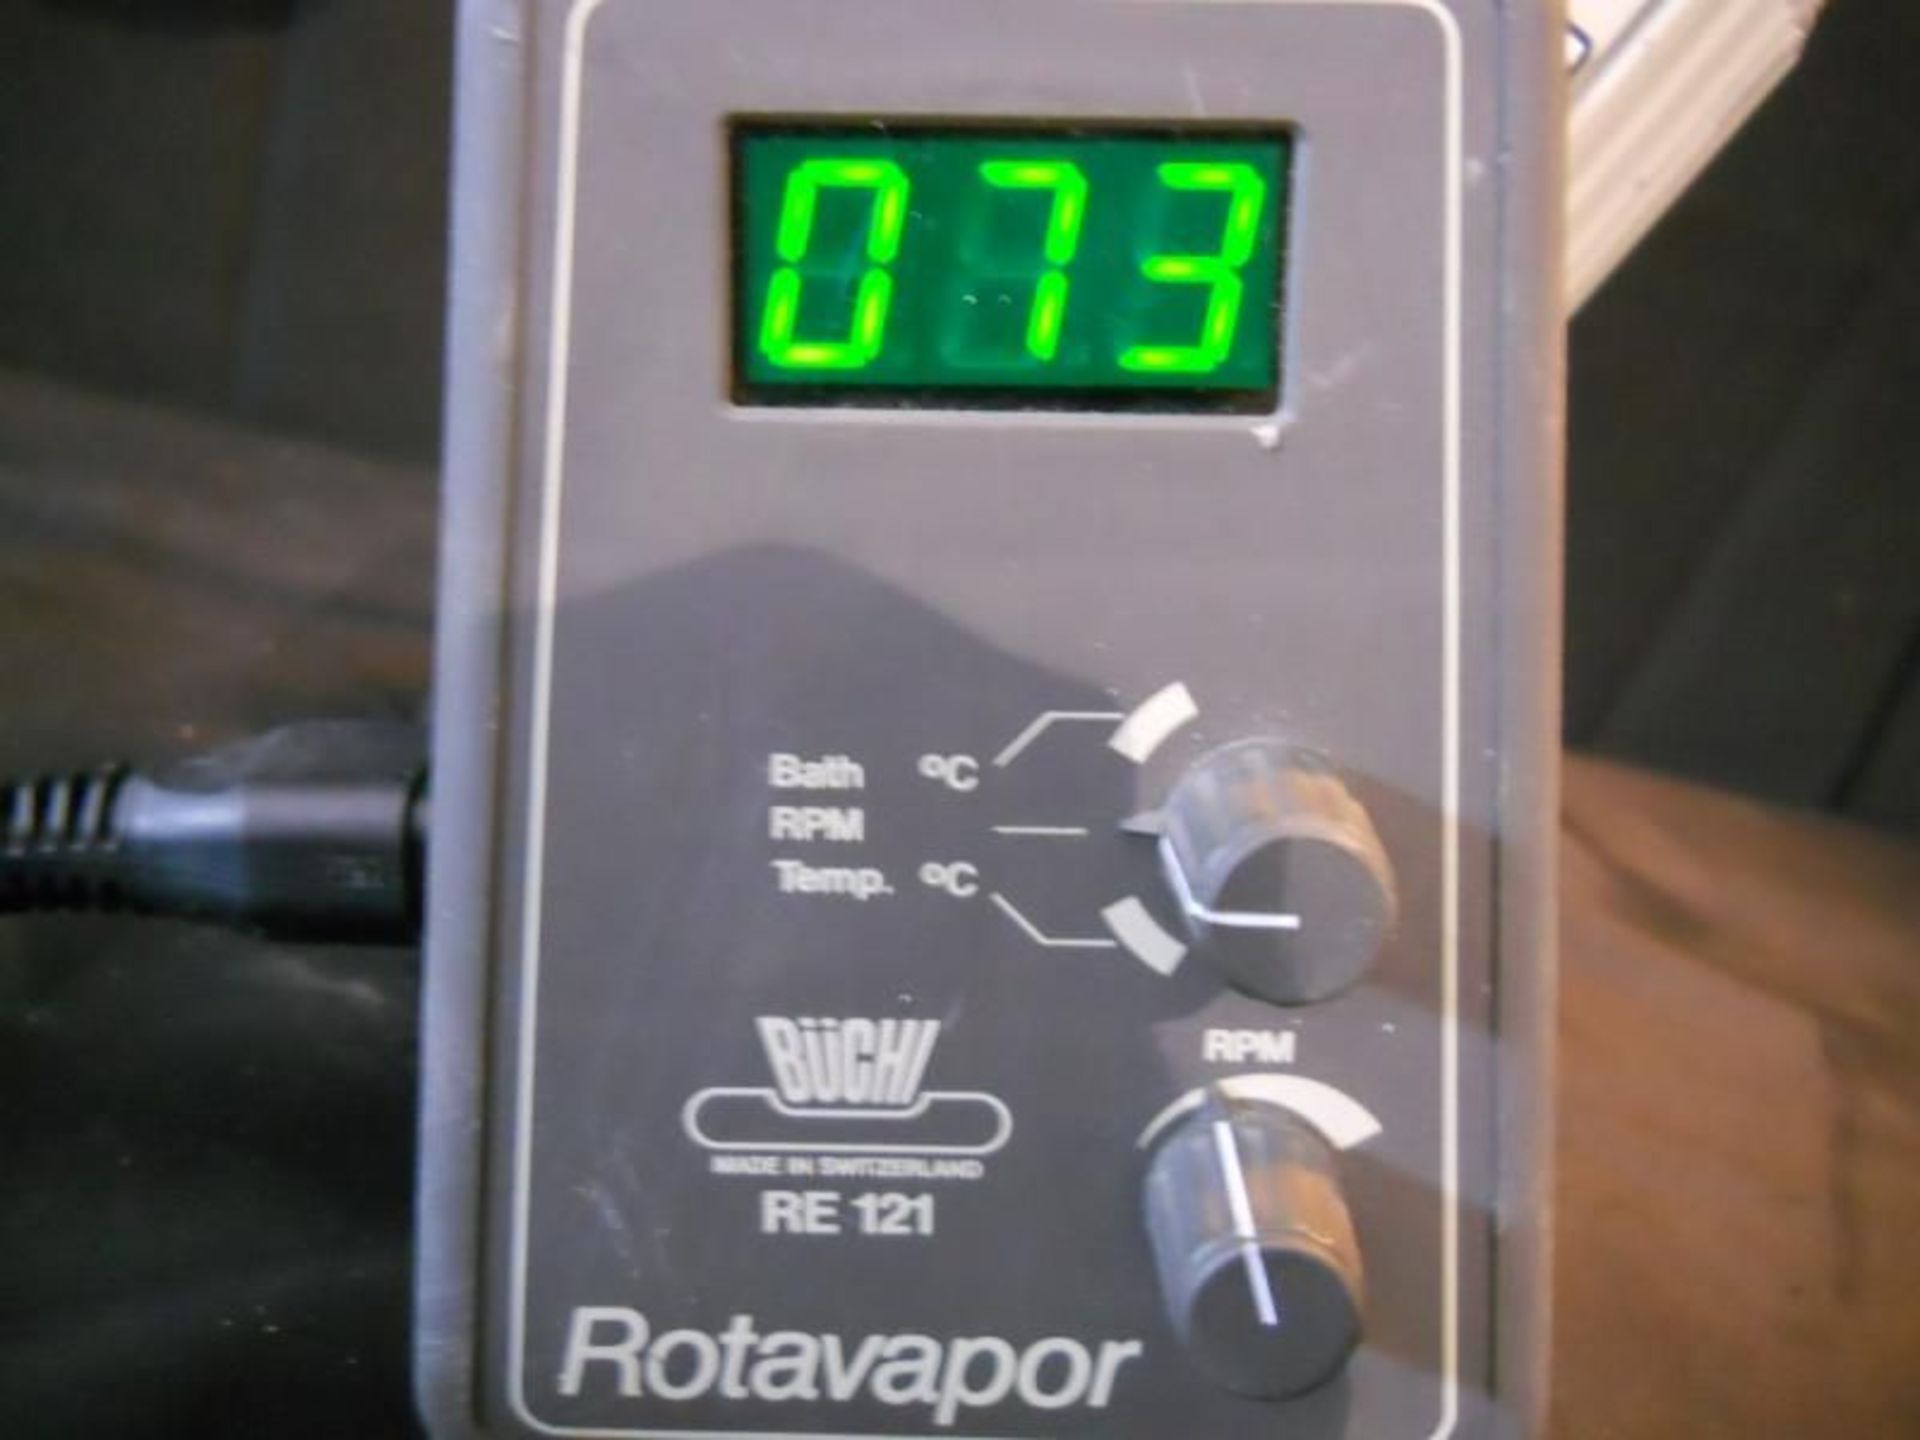 Buchi Rotavapor Rotating Evaporator RE121 (RE 121) Brinkmann Sybron, Qty 1, 321468981718 - Image 5 of 8